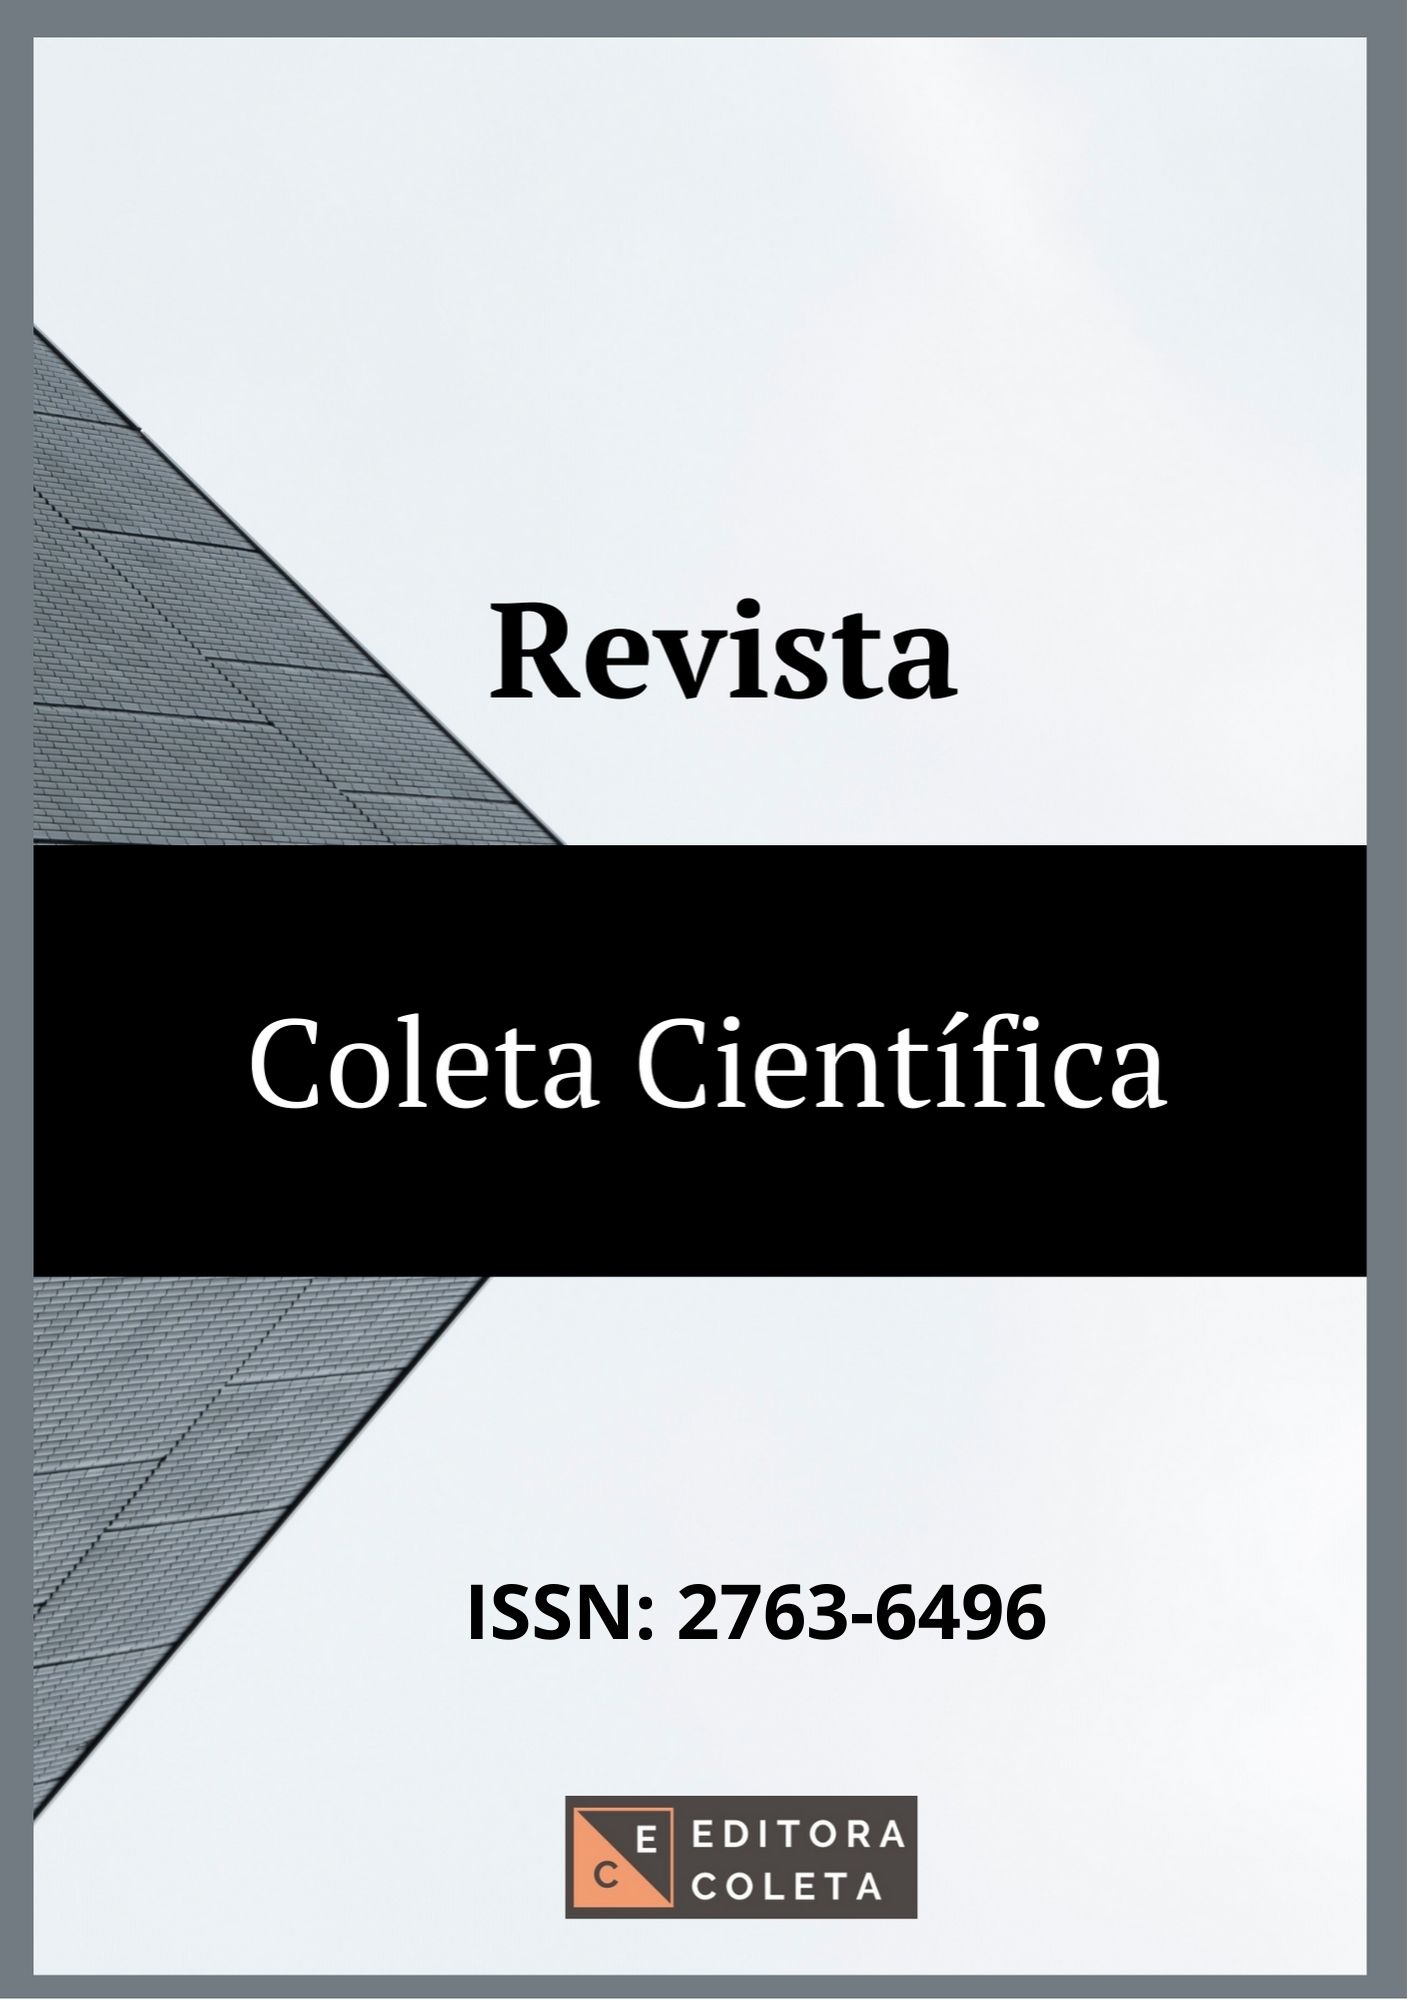 					Visualizar v. 3 n. 6 (2019): Revista Coleta Científica
				